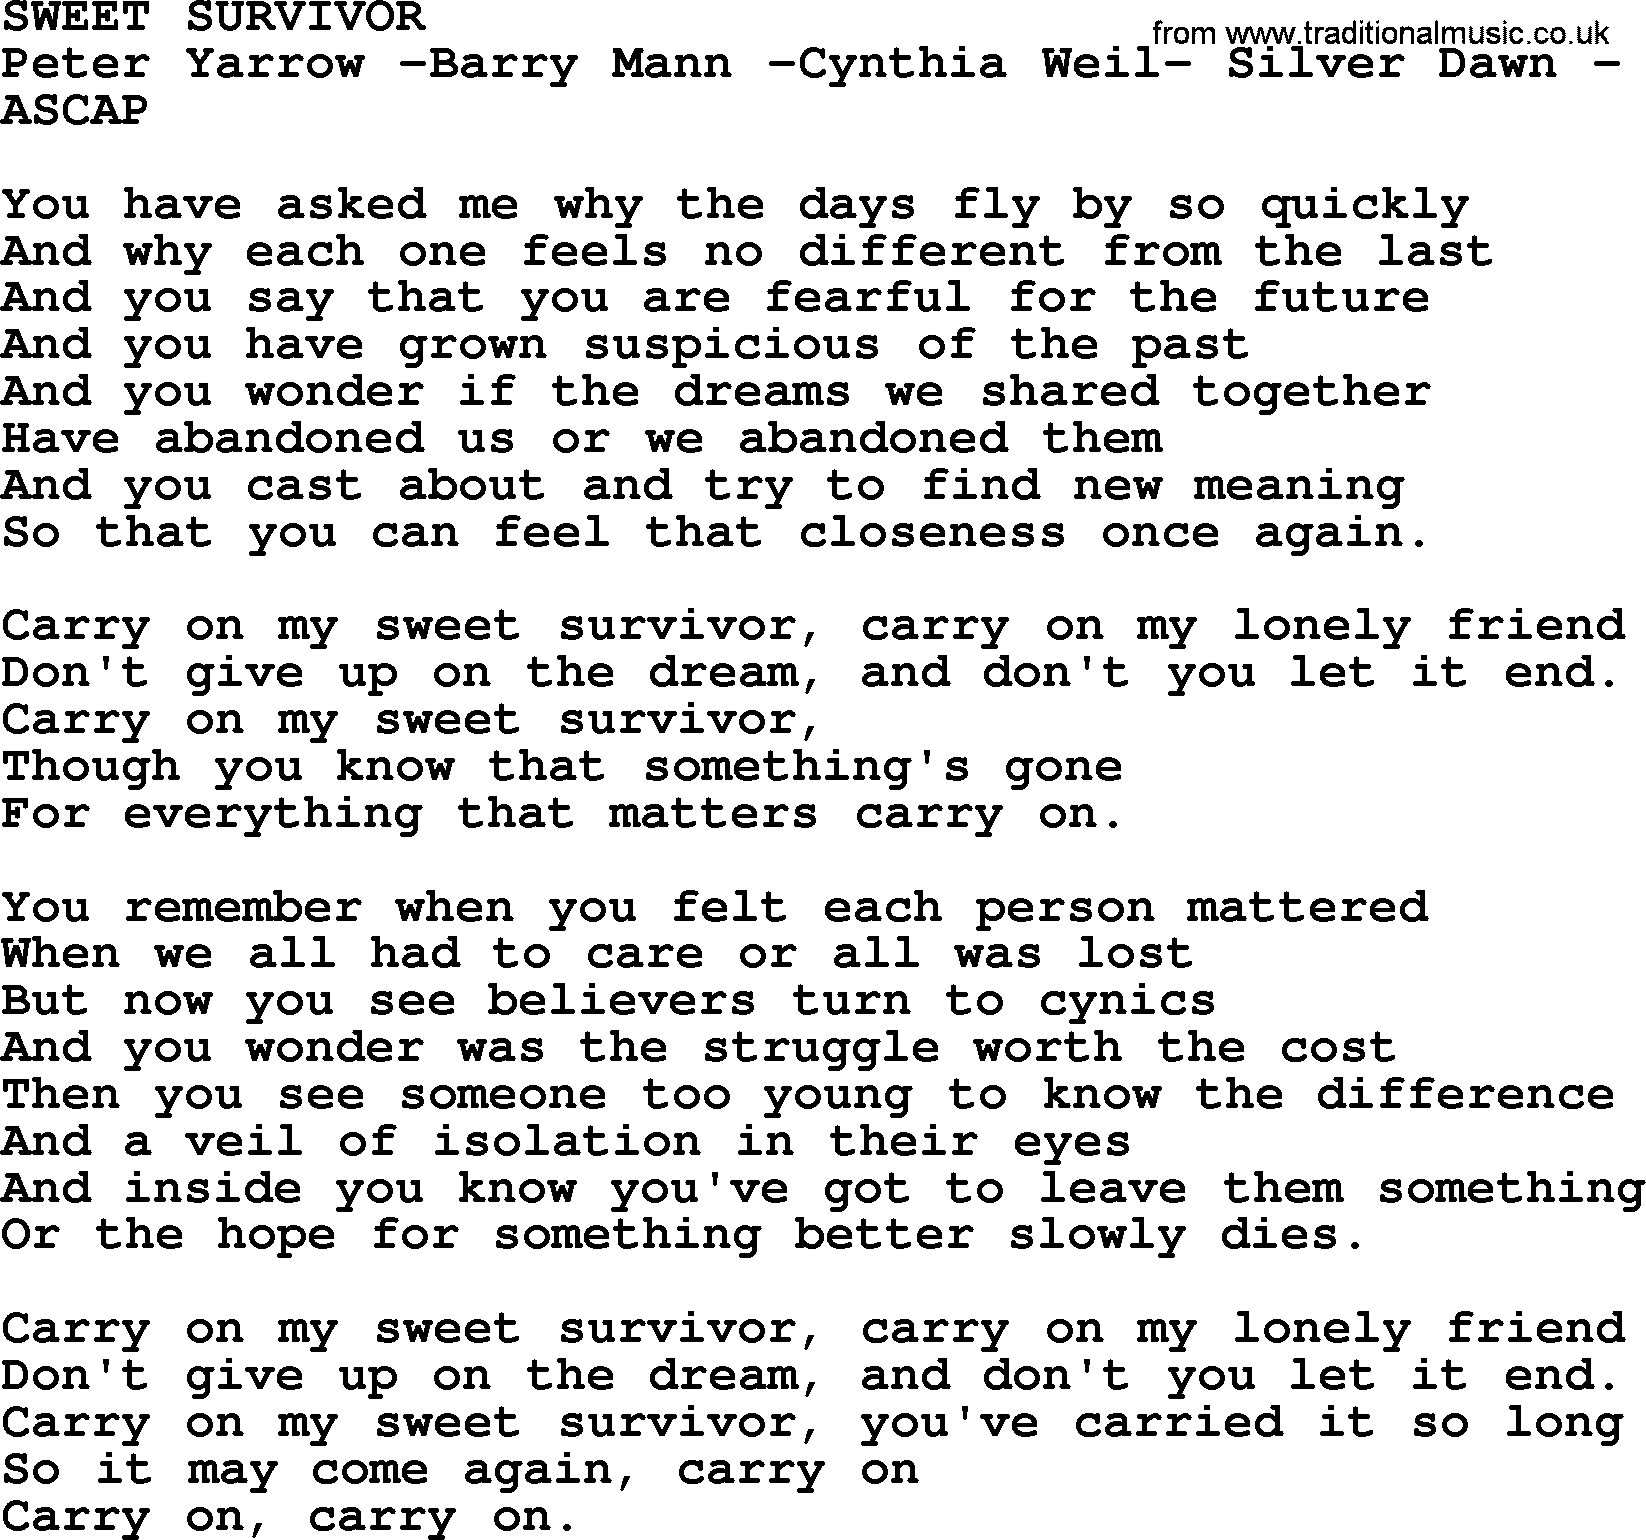 Peter, Paul and Mary song Sweet Survivor lyrics